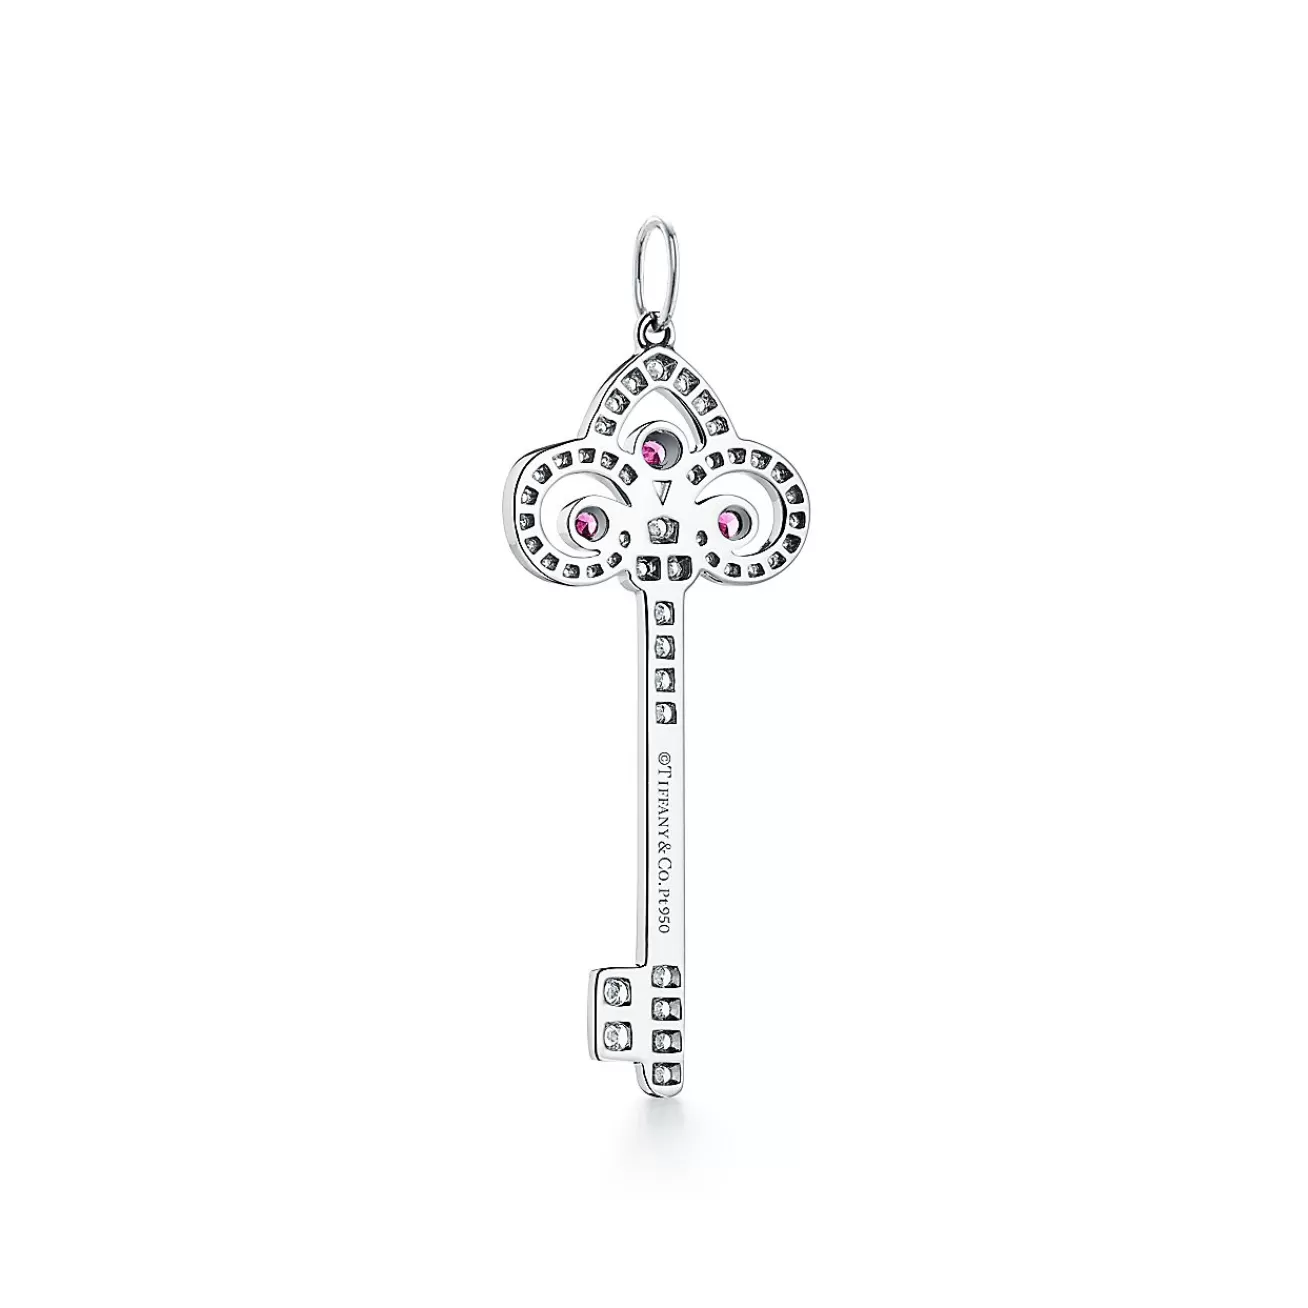 Tiffany & Co. Tiffany Keys Tiffany Fleur de Lis key pendant in platinum with gemstones. | ^ Platinum Jewelry | Diamond Jewelry